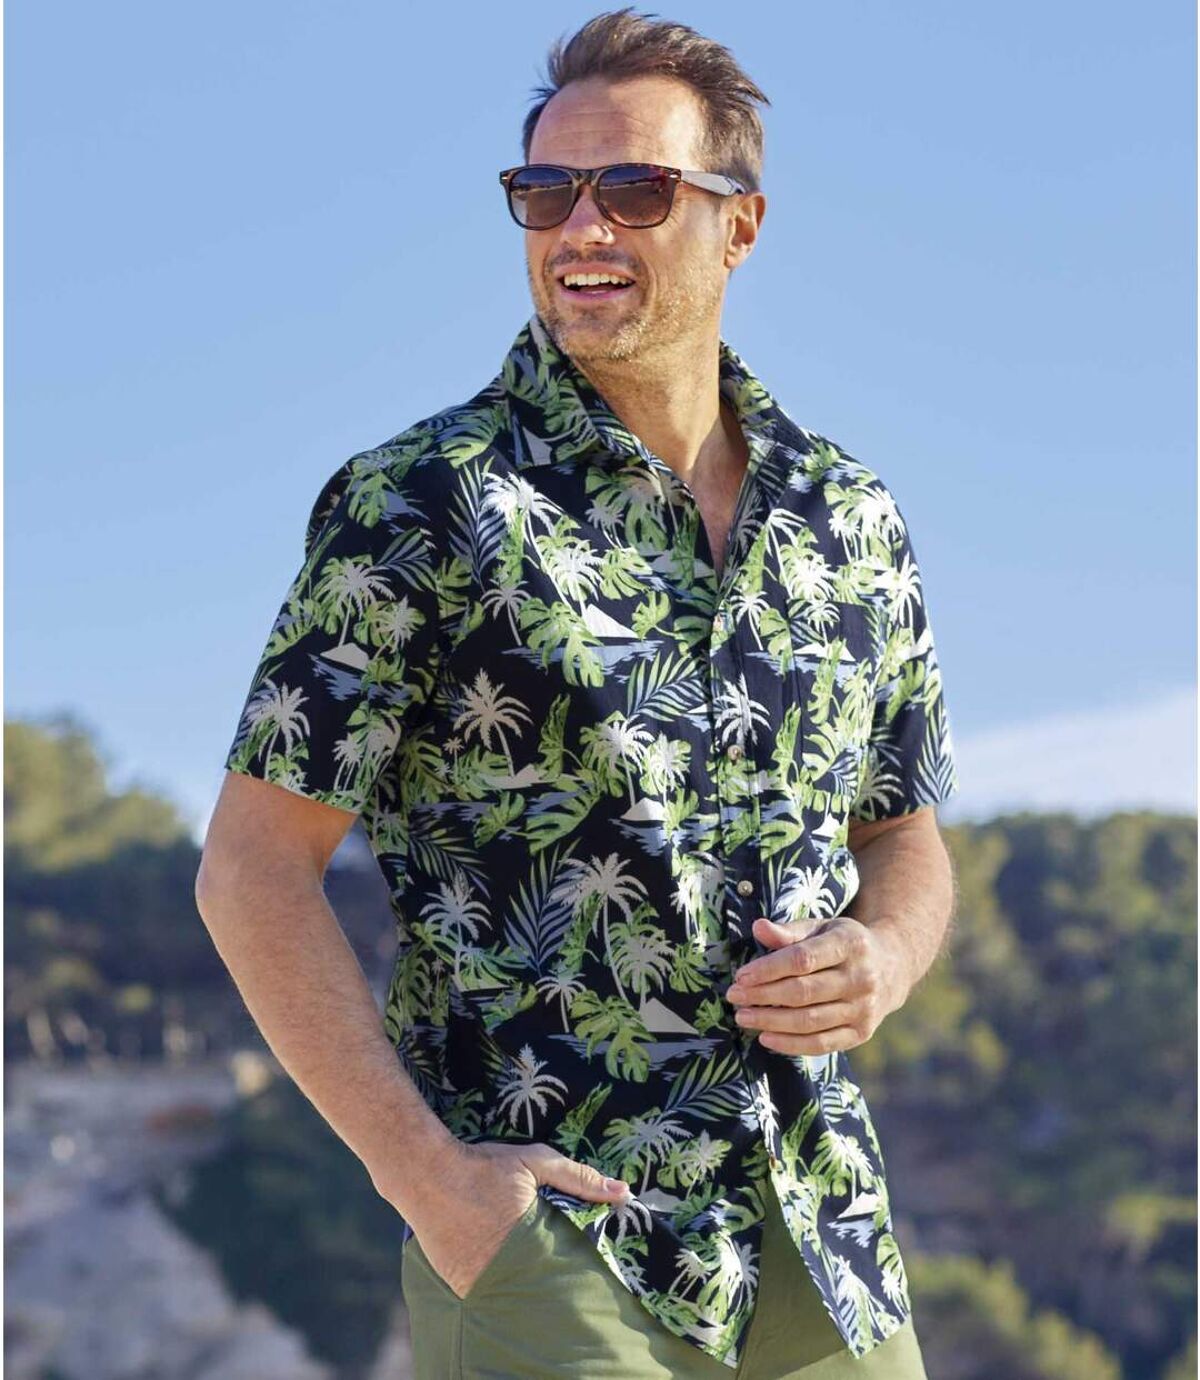 Men's Tropical Print Shirt Atlas For Men